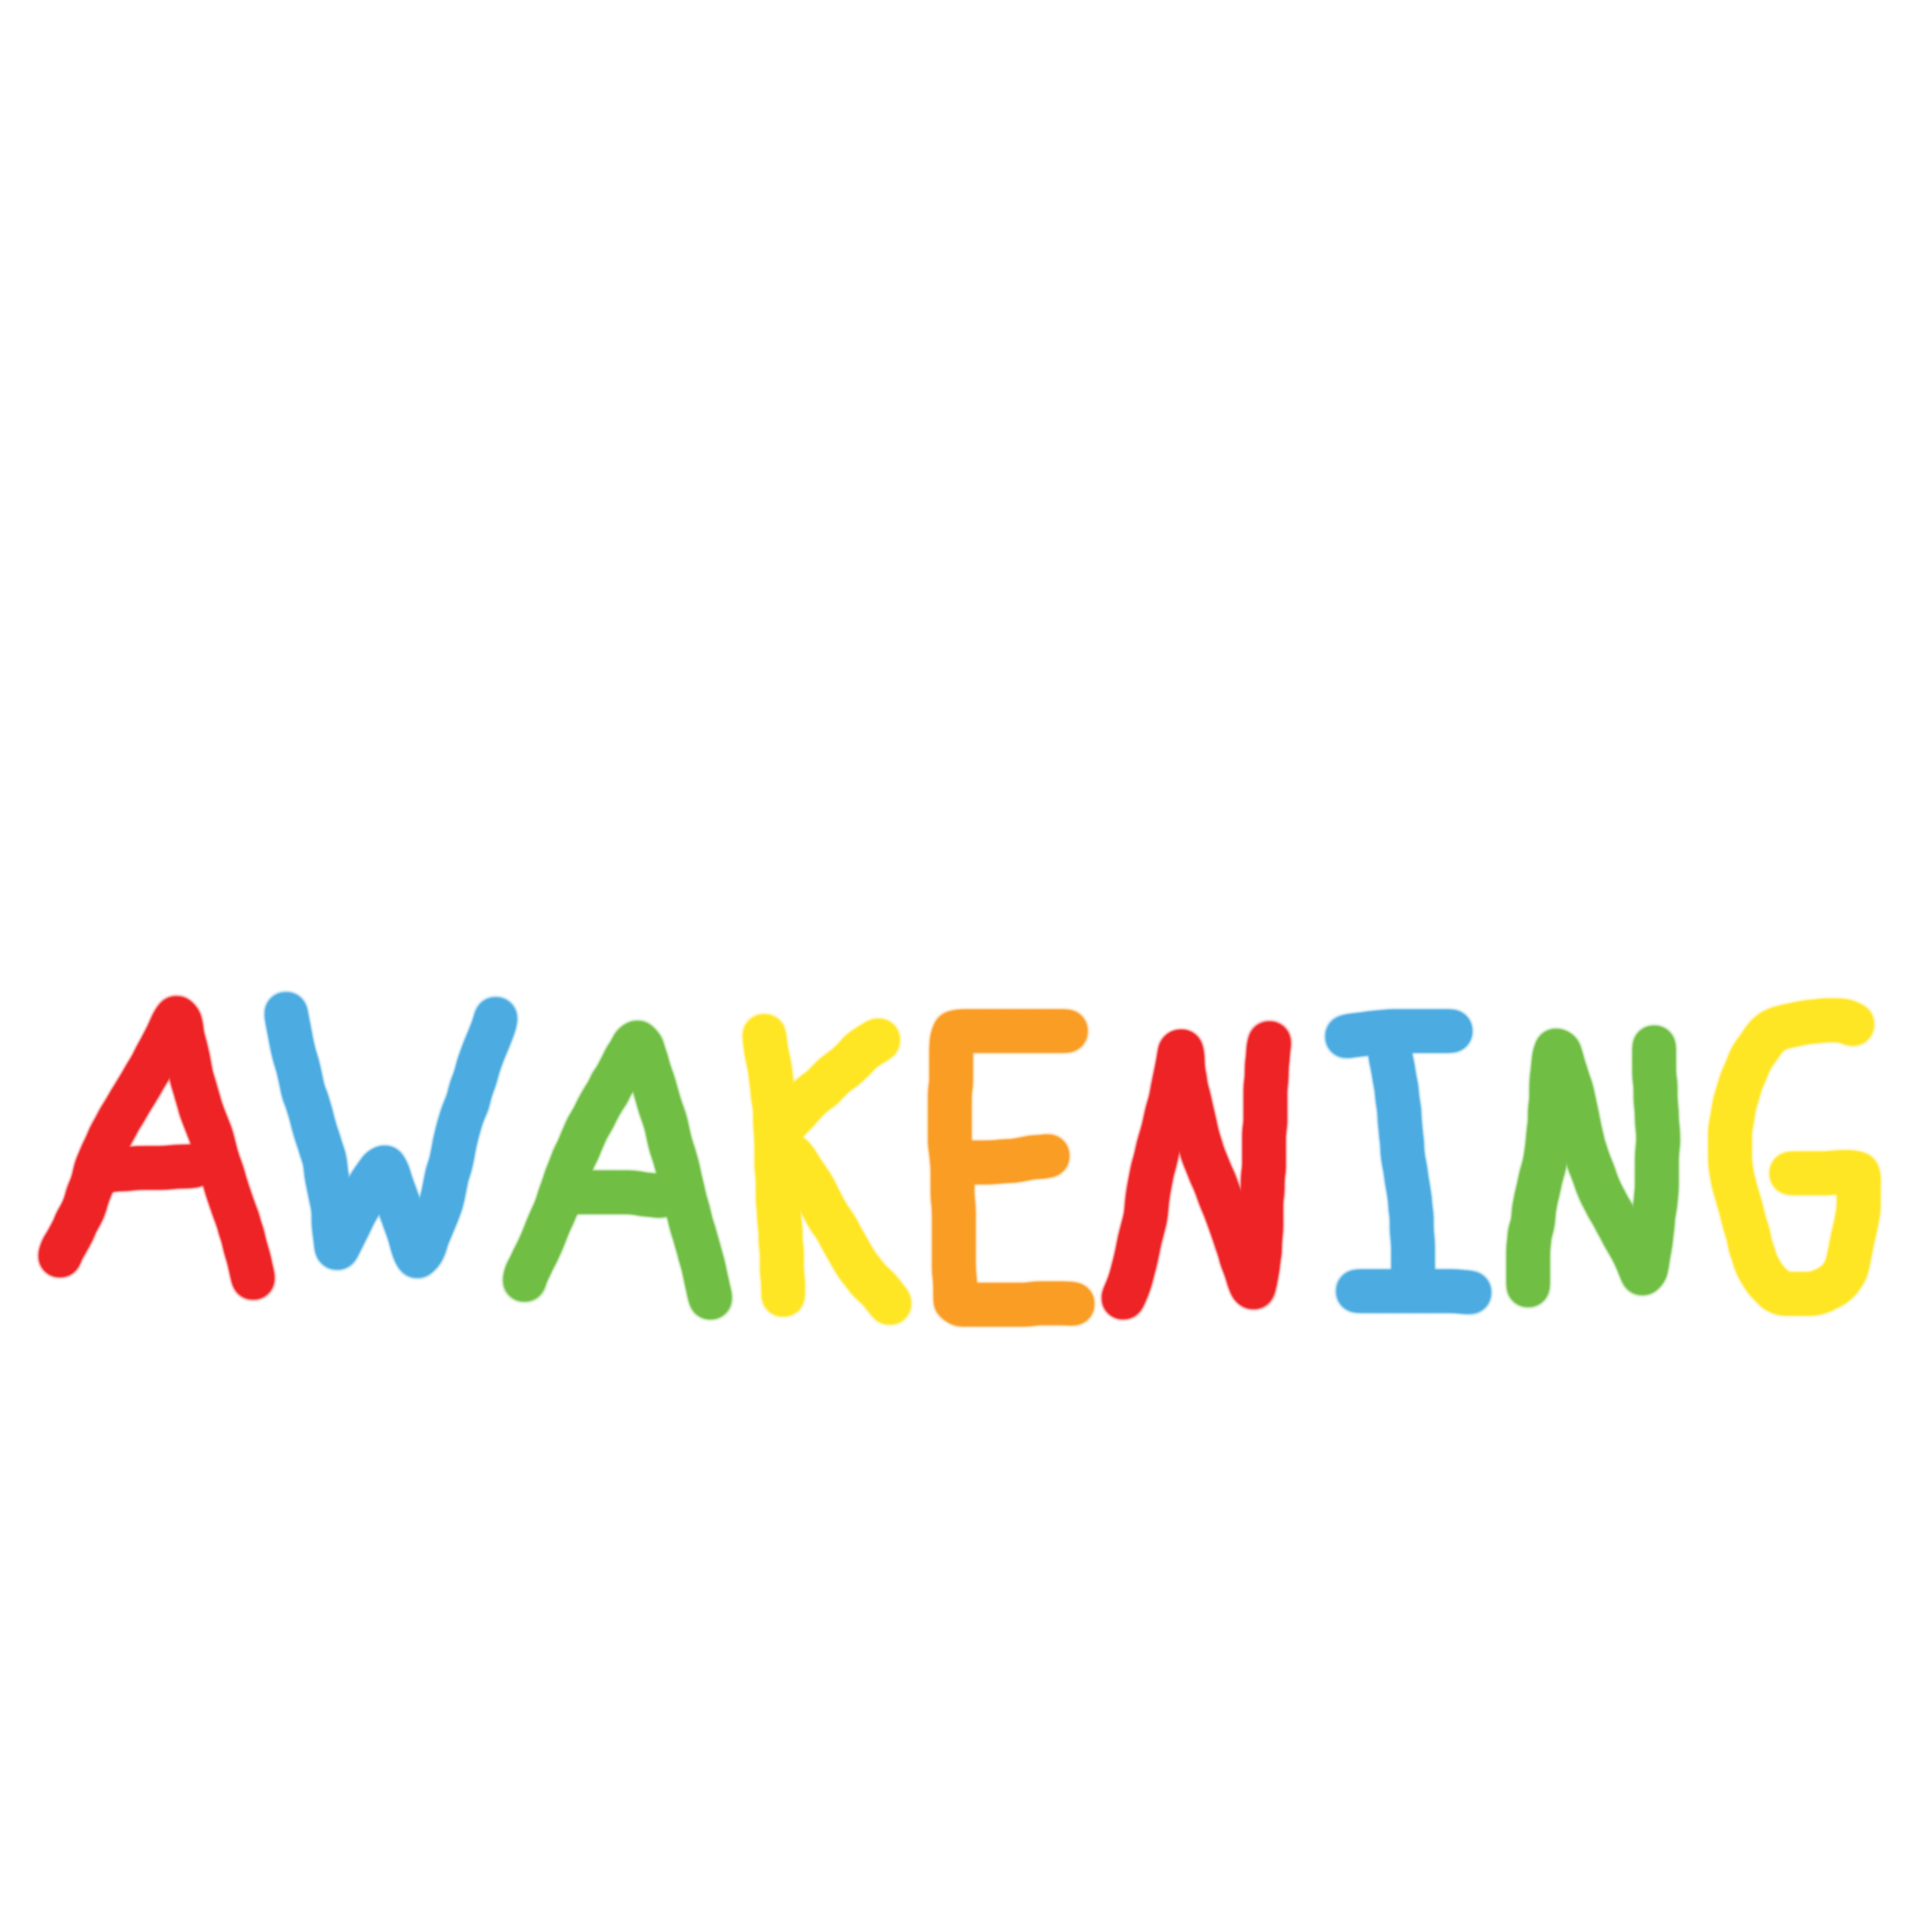 Chompa's Awakening